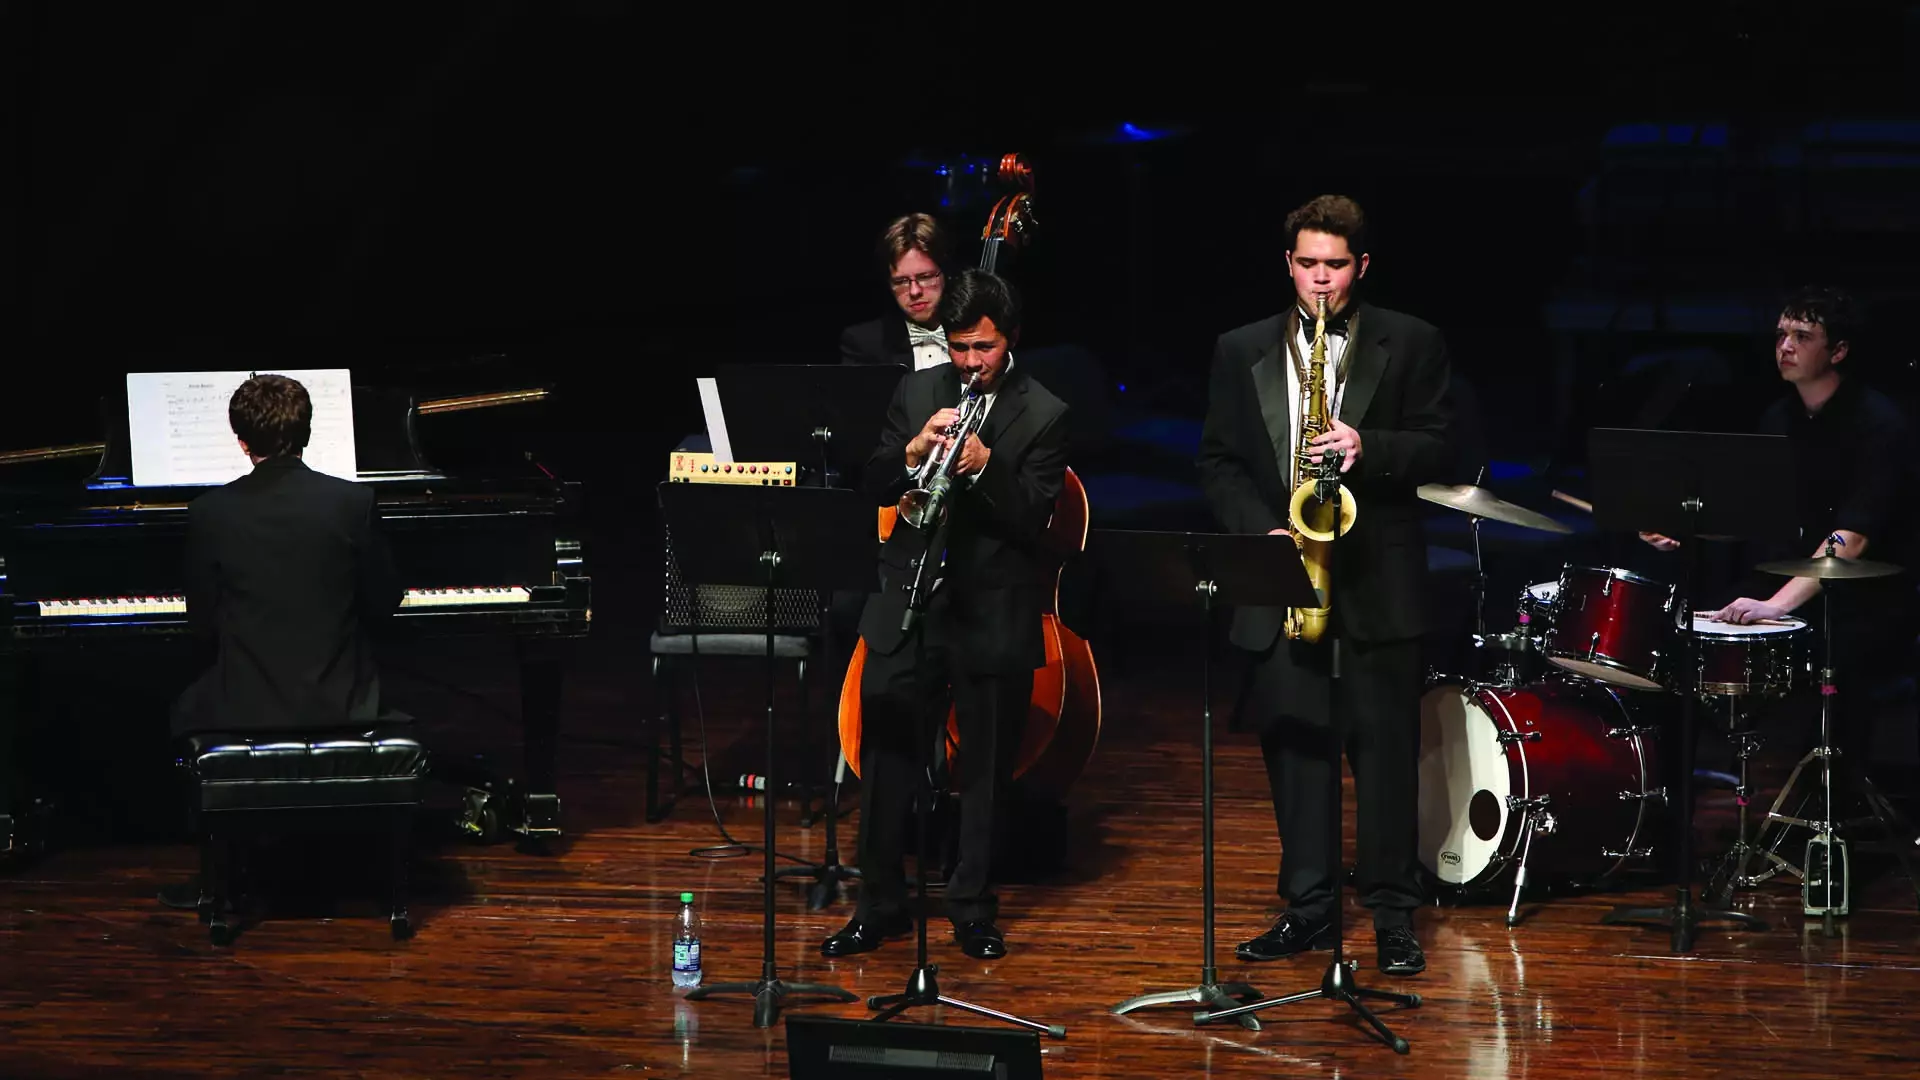 Jazz musicians on stage